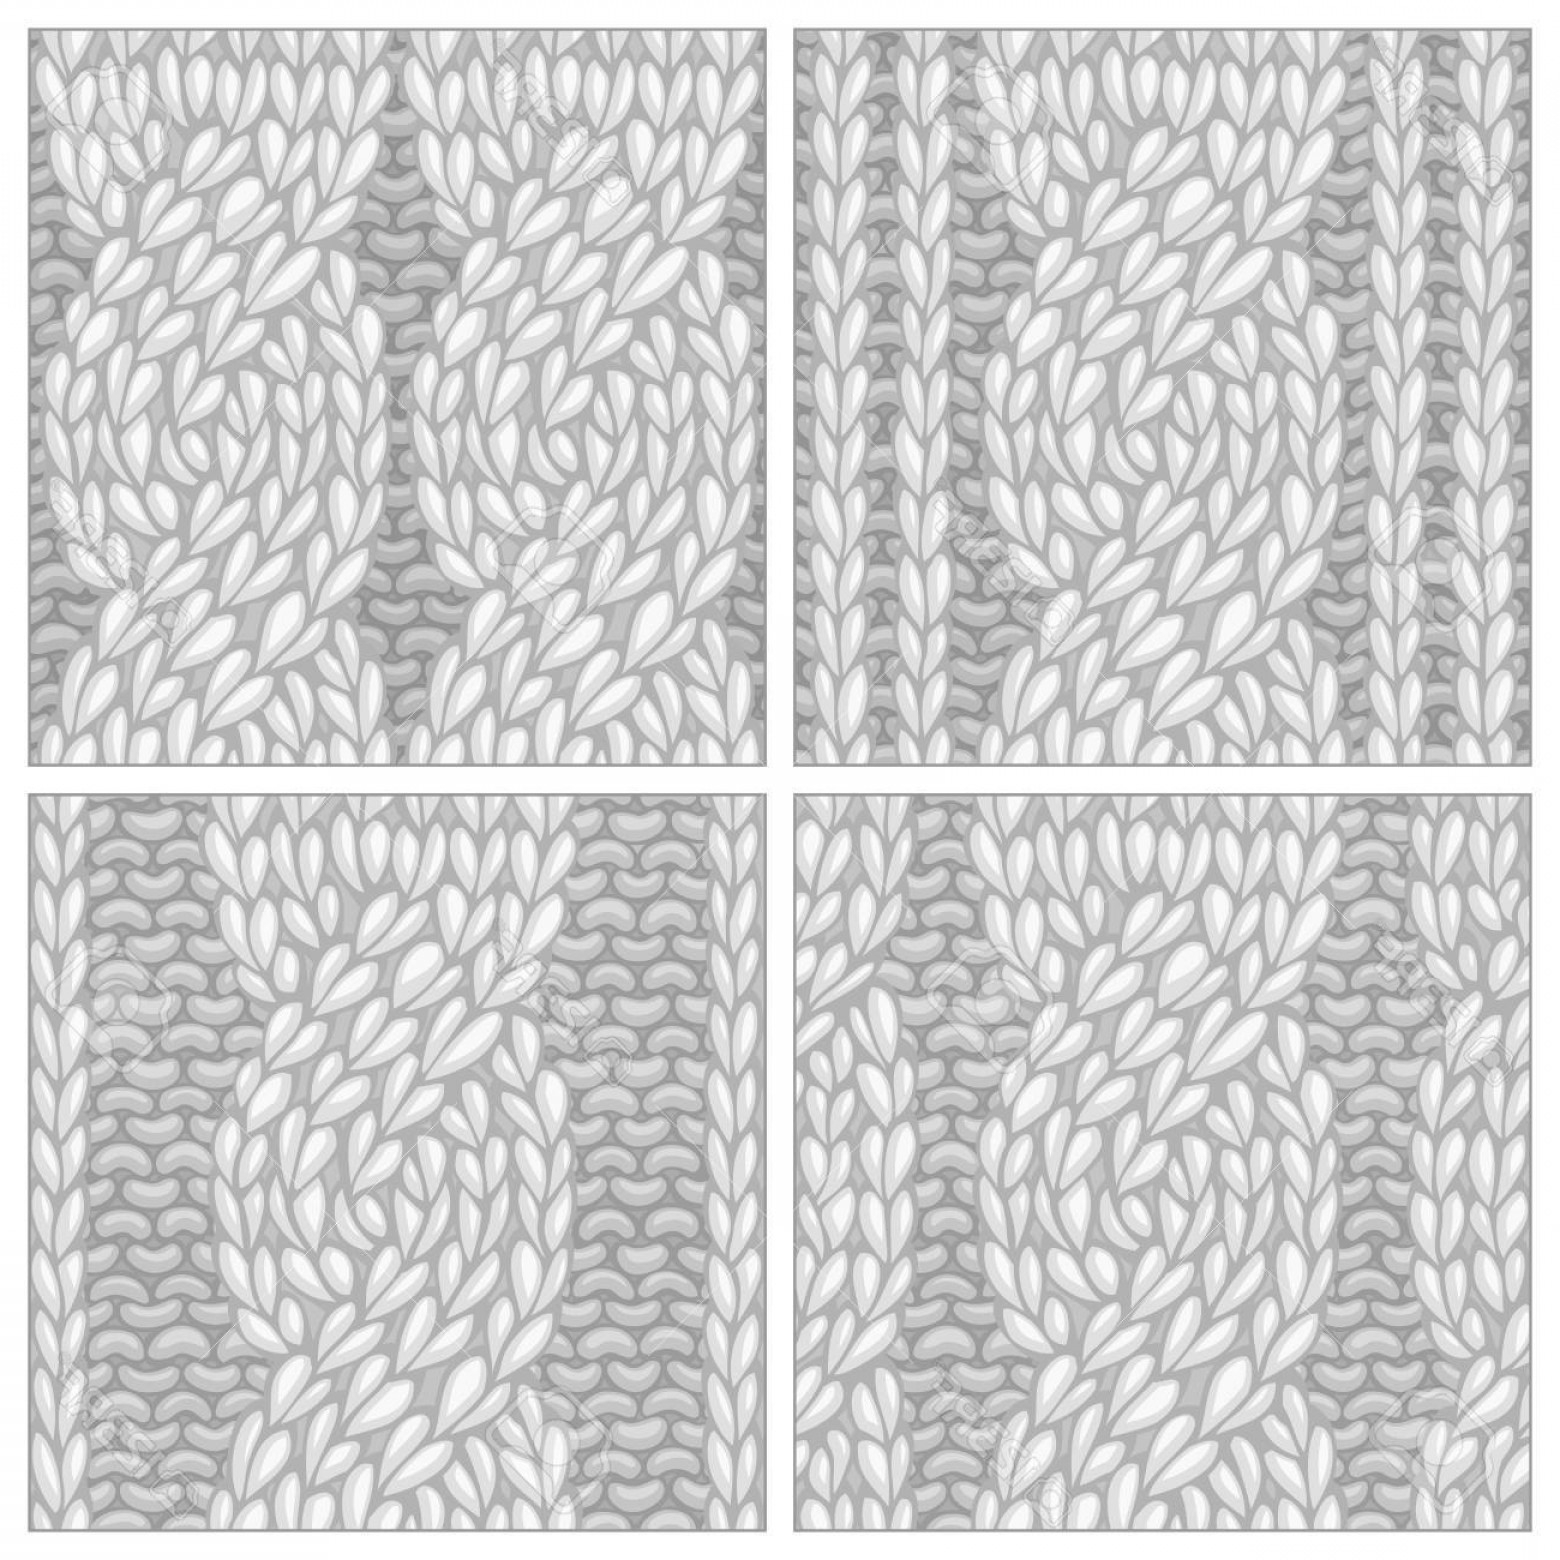 Seamless Knitting Patterns Photostock Vector Seamless Knitting Pattern Twisting To The Left